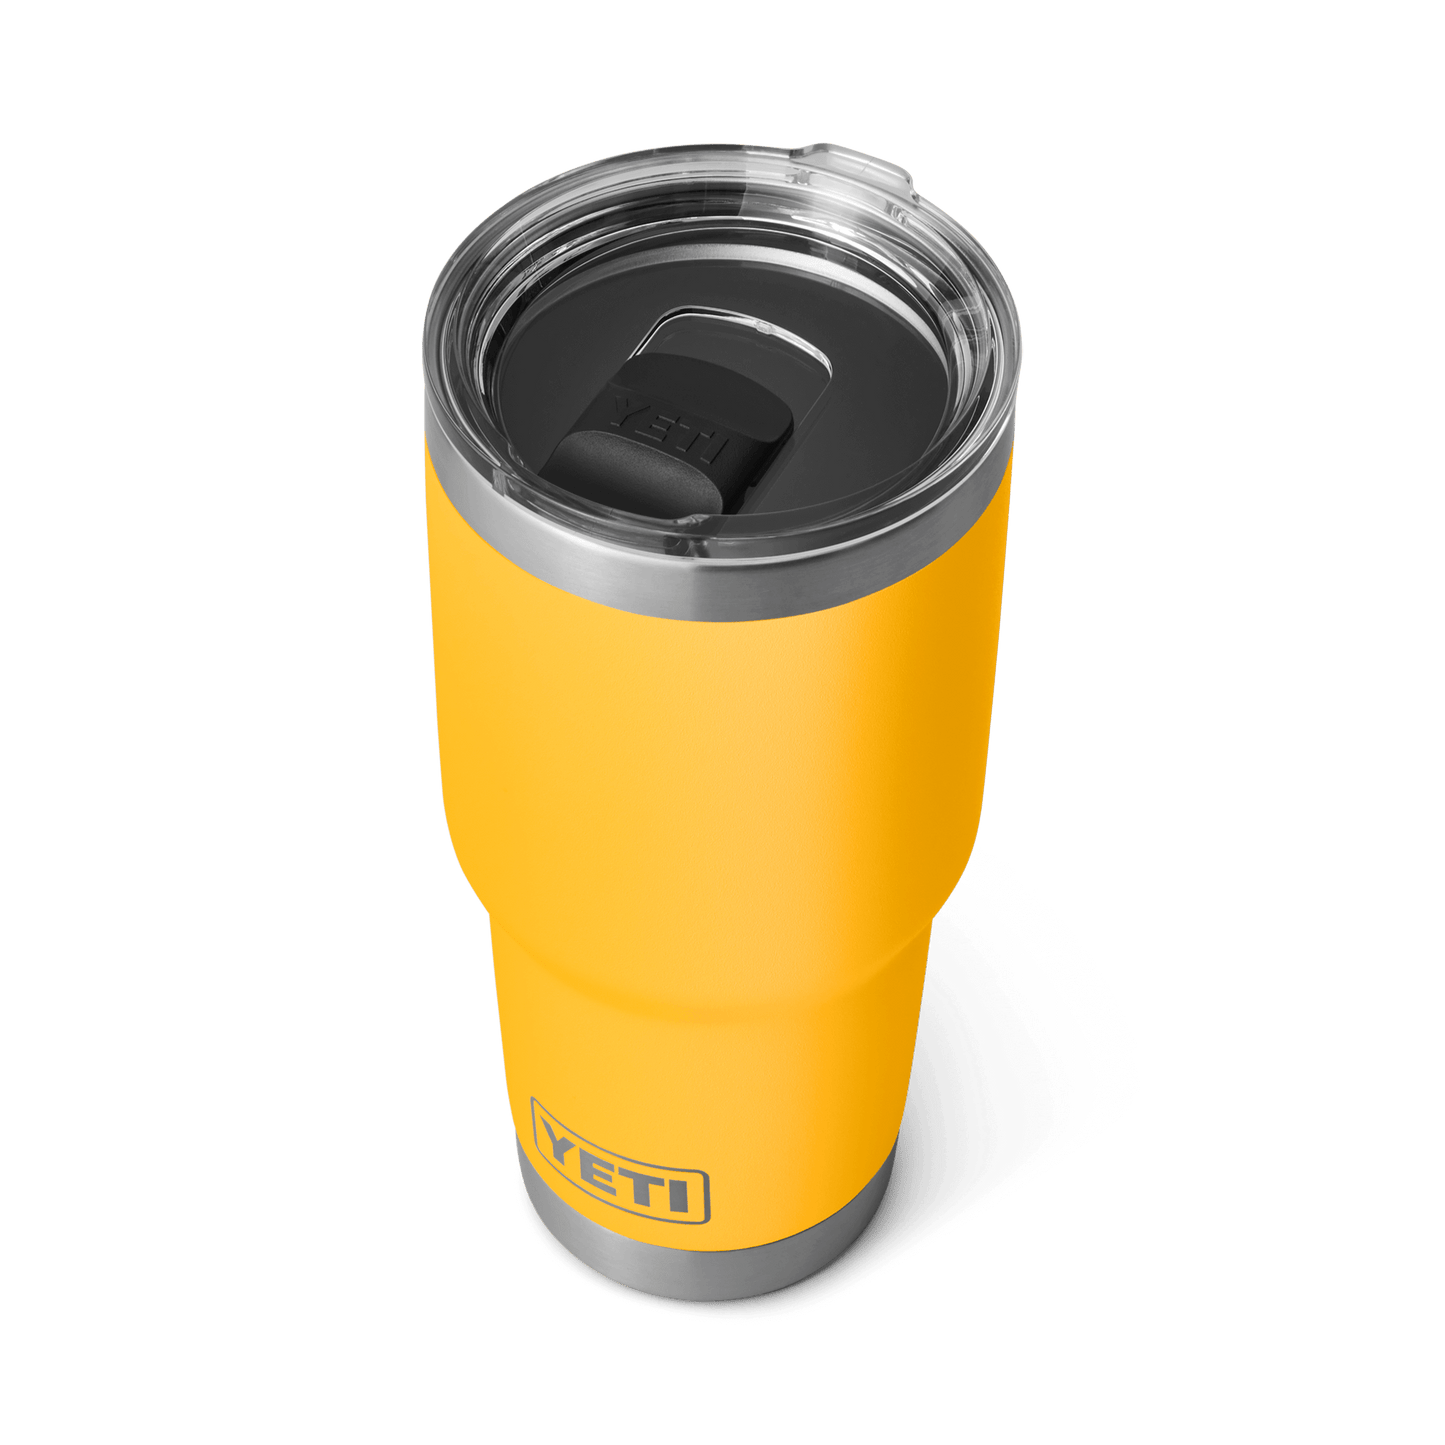 YETI Rambler® 30 oz (887 ml) Tumbler Alpine Yellow